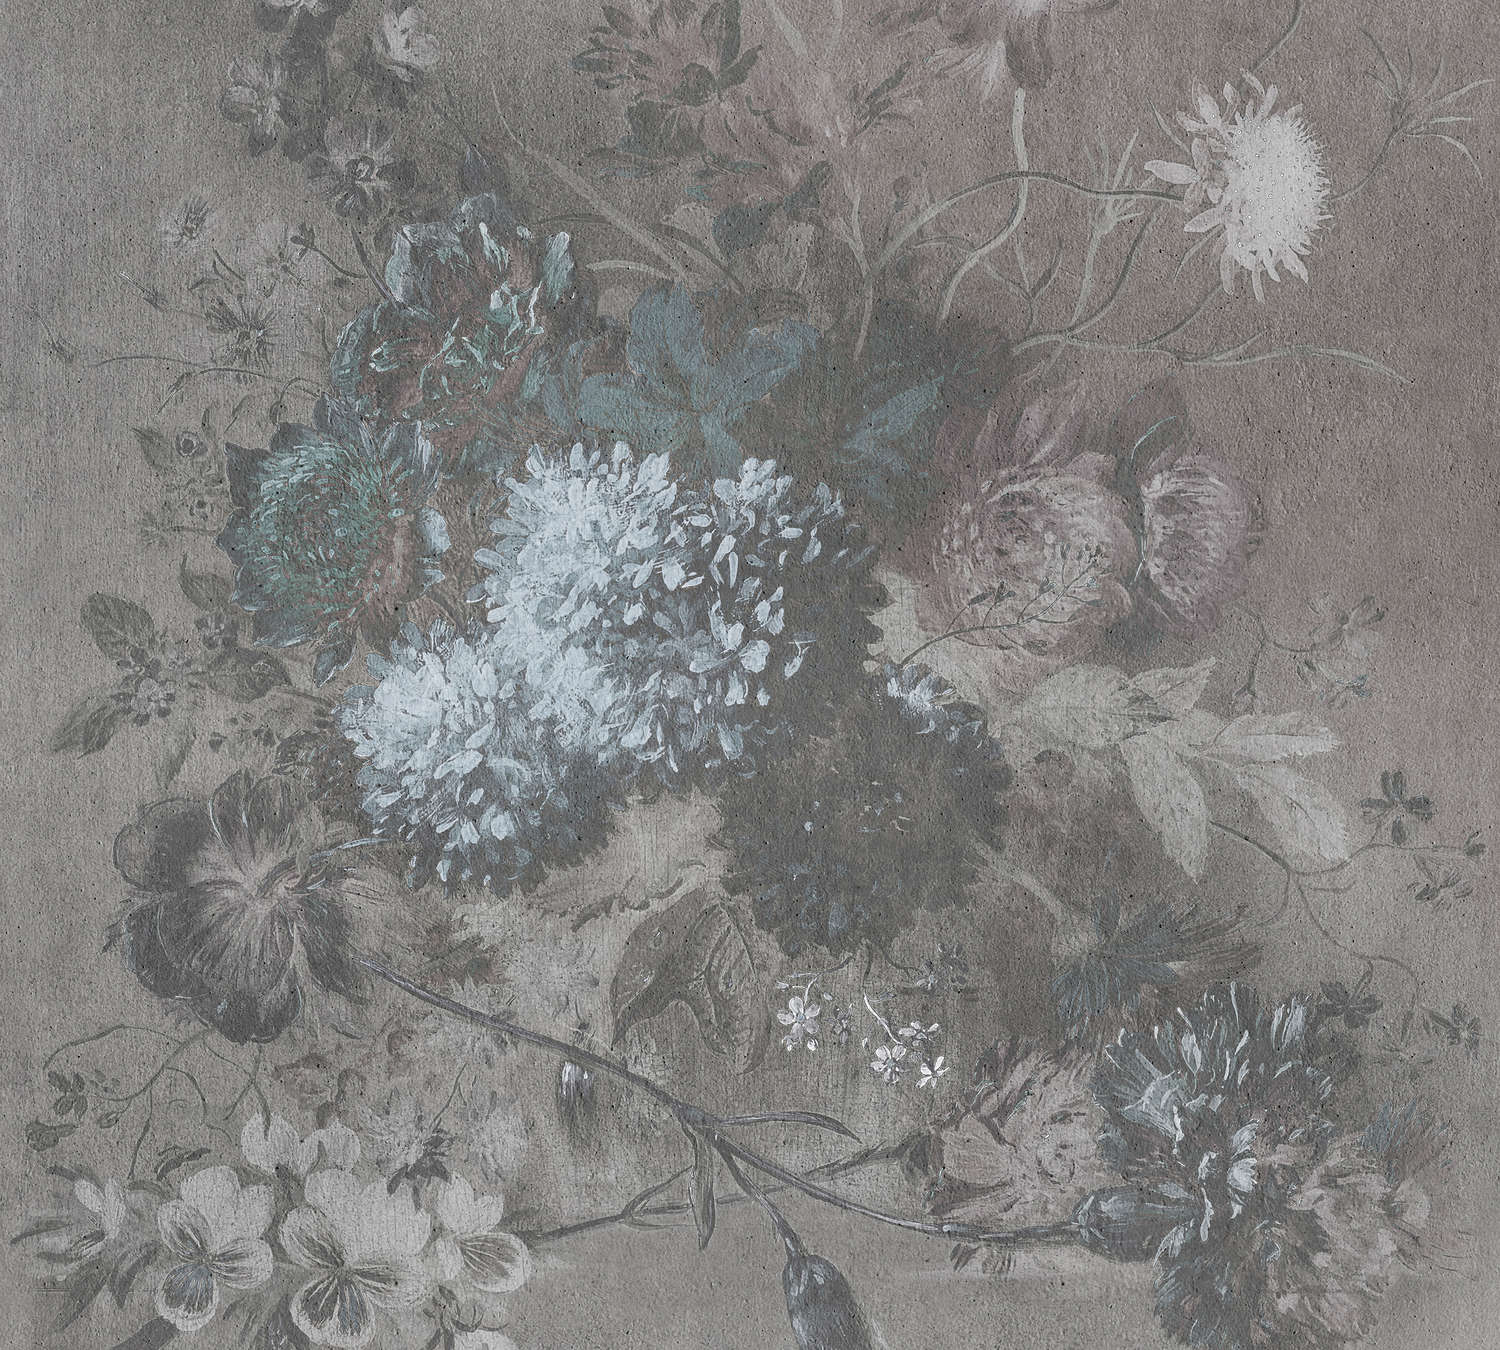             Fototapete Blumen-Bouquet im Vintage Stil – Blau, Grau
        